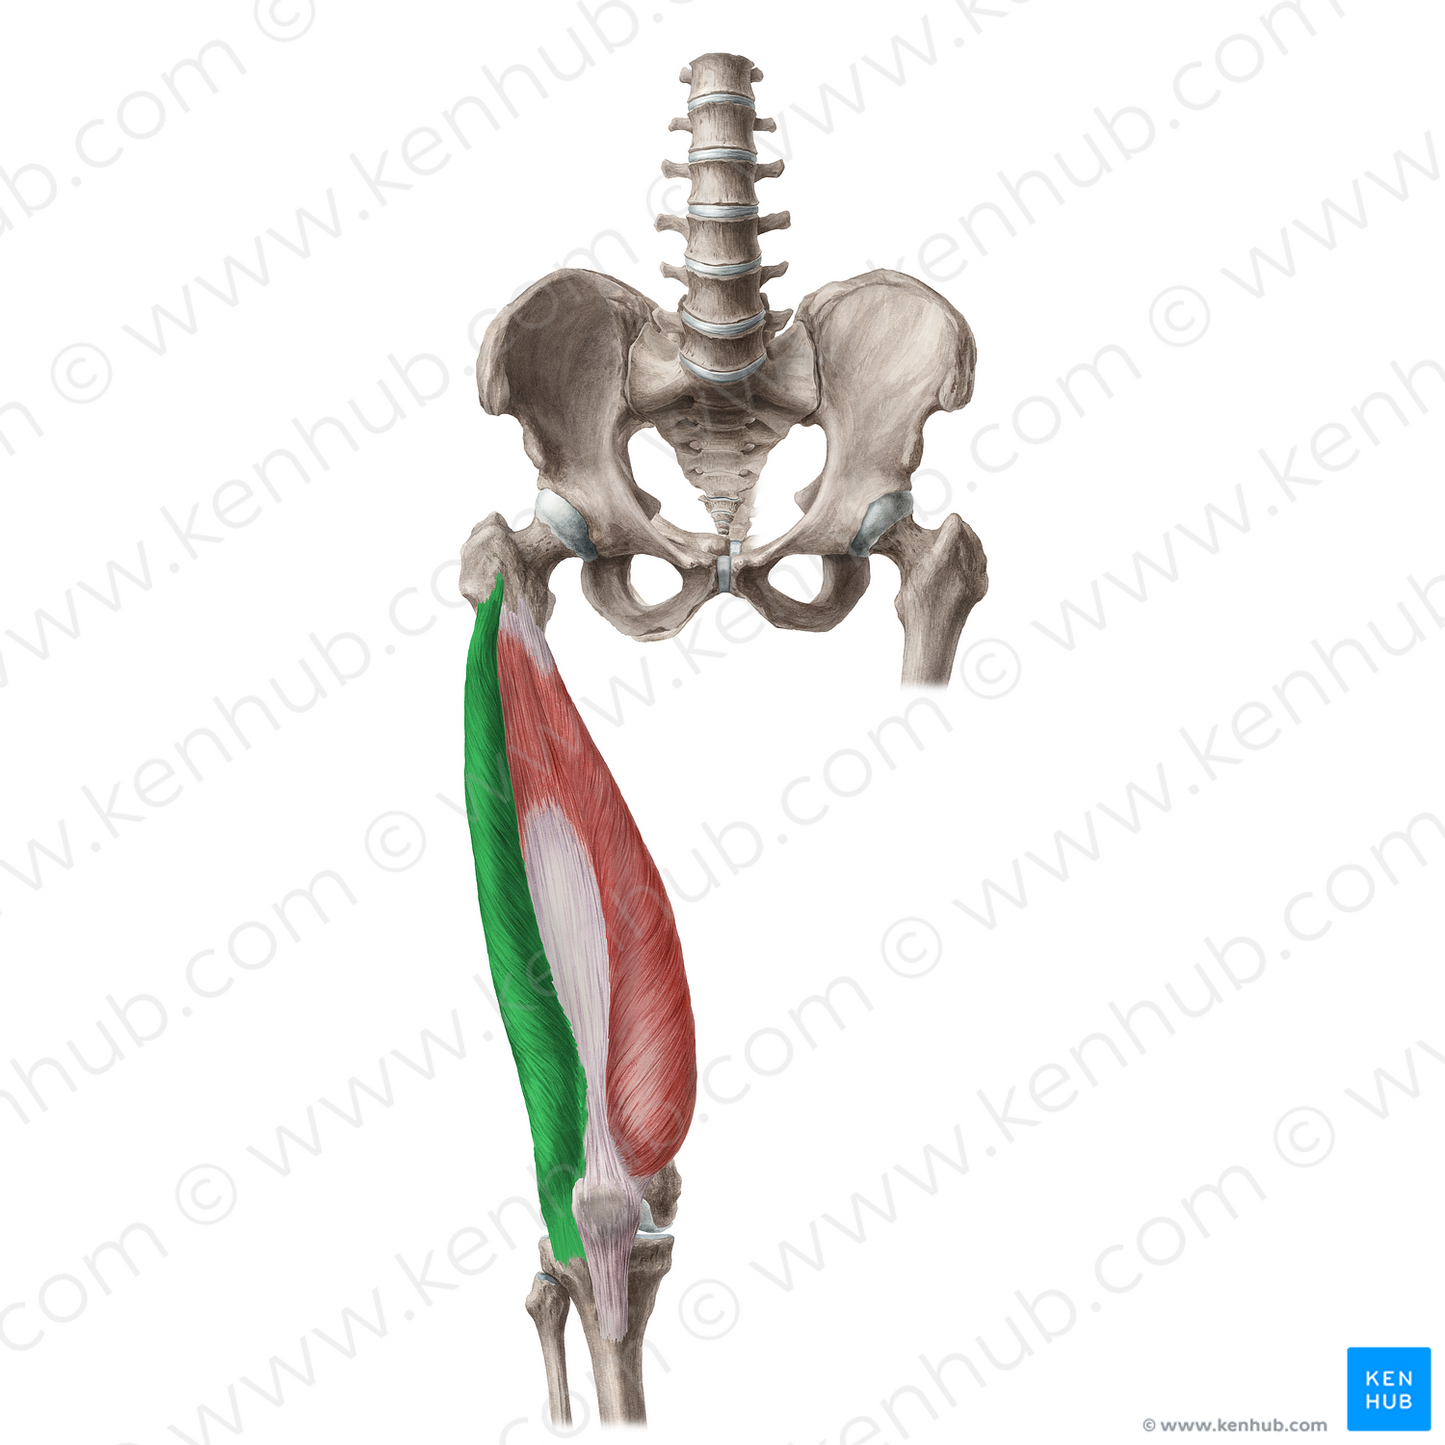 Vastus lateralis muscle (#6169)